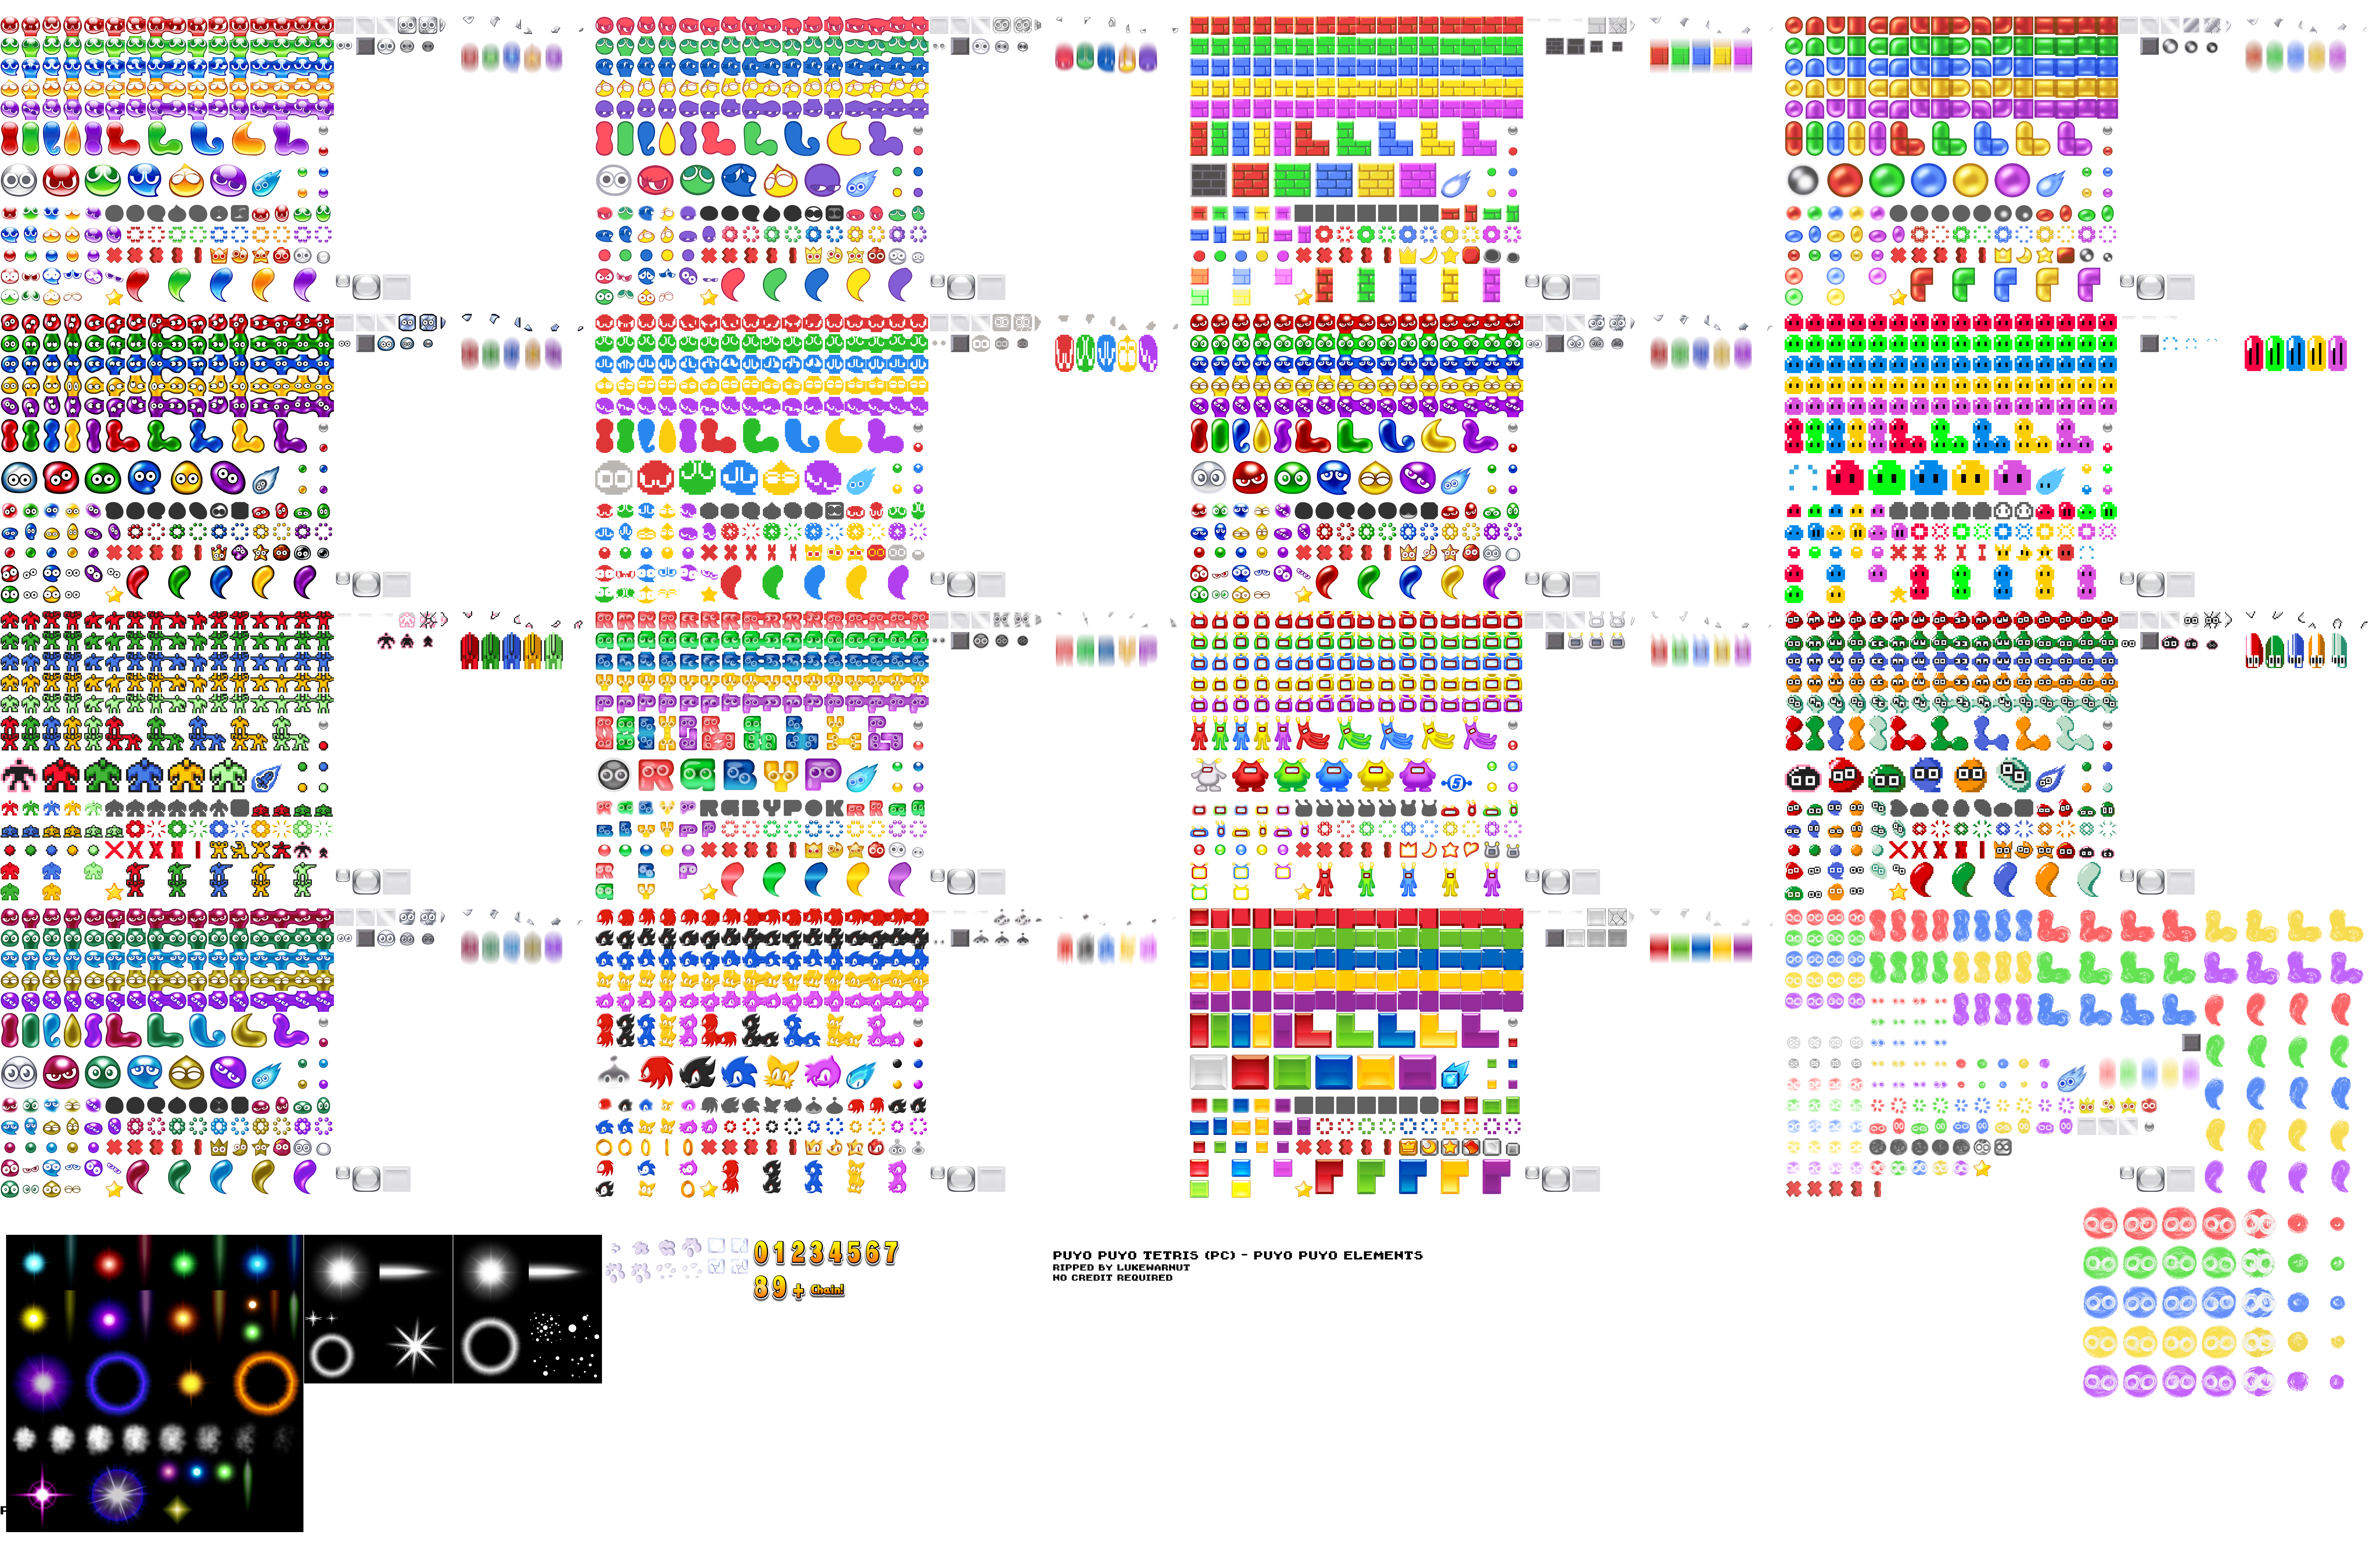 Puyo Puyo Tetris - Puyo Puyo Elements